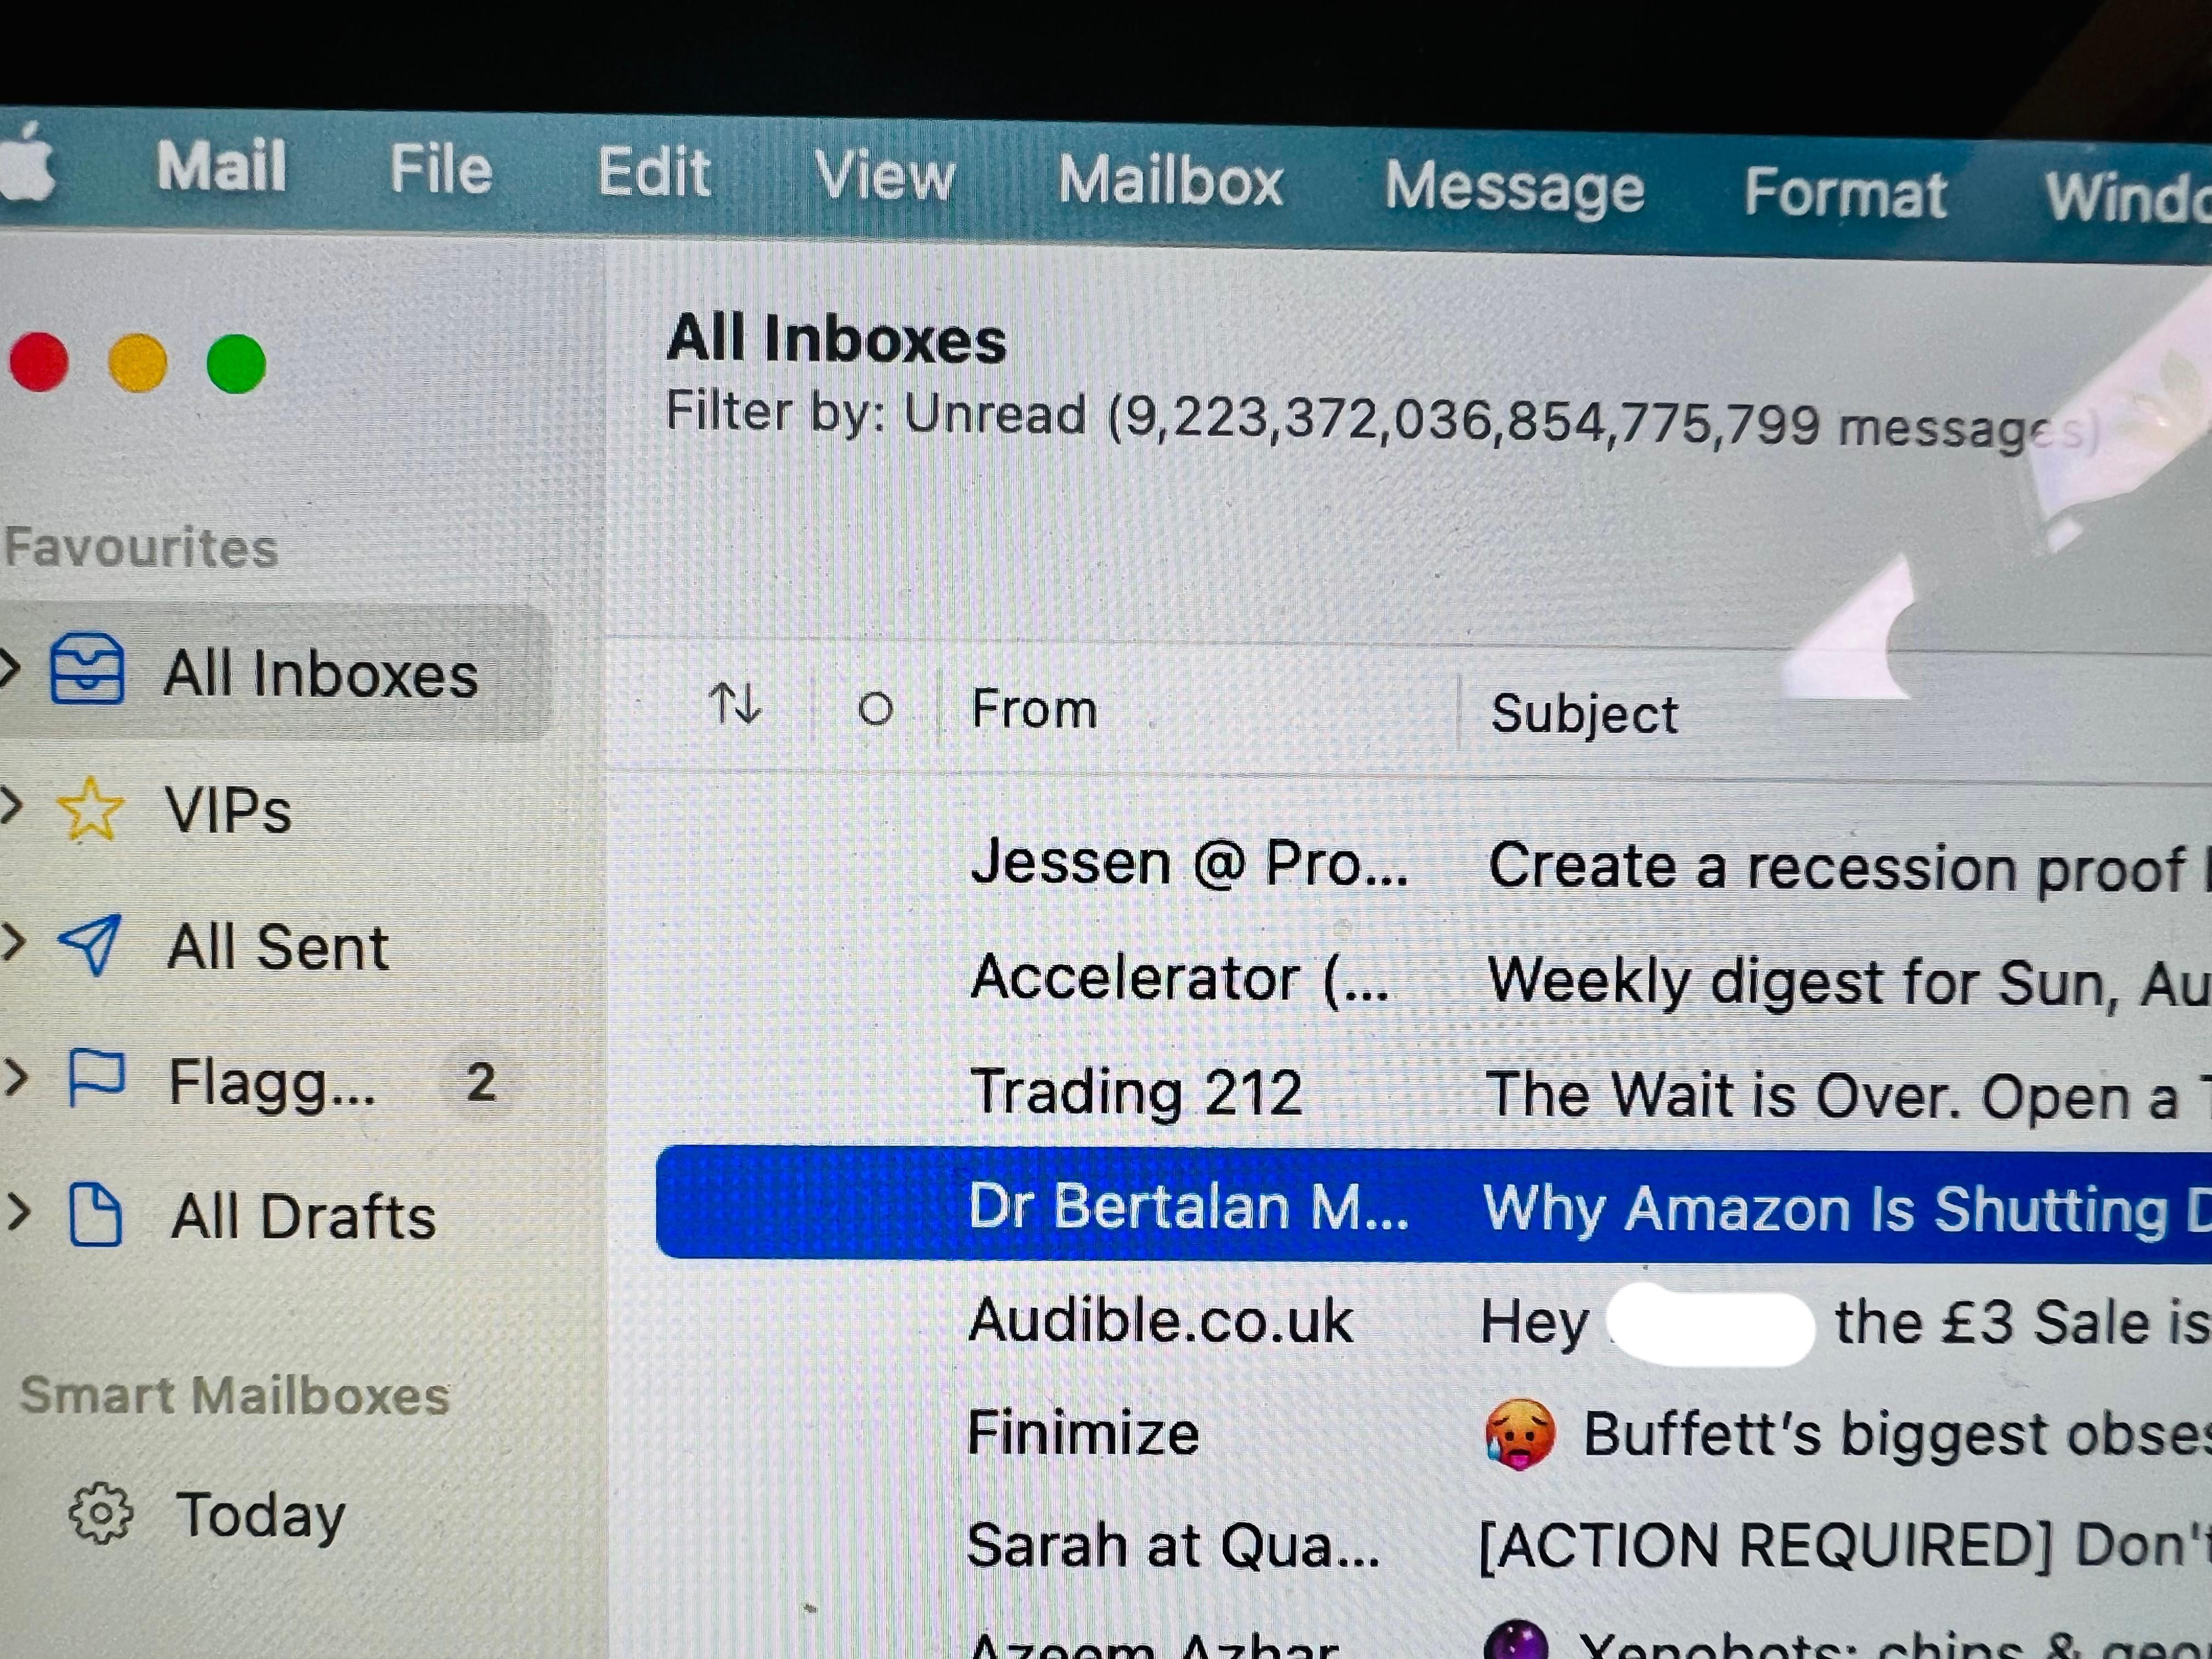 Woke up to 9 QUINTILLION unread emails